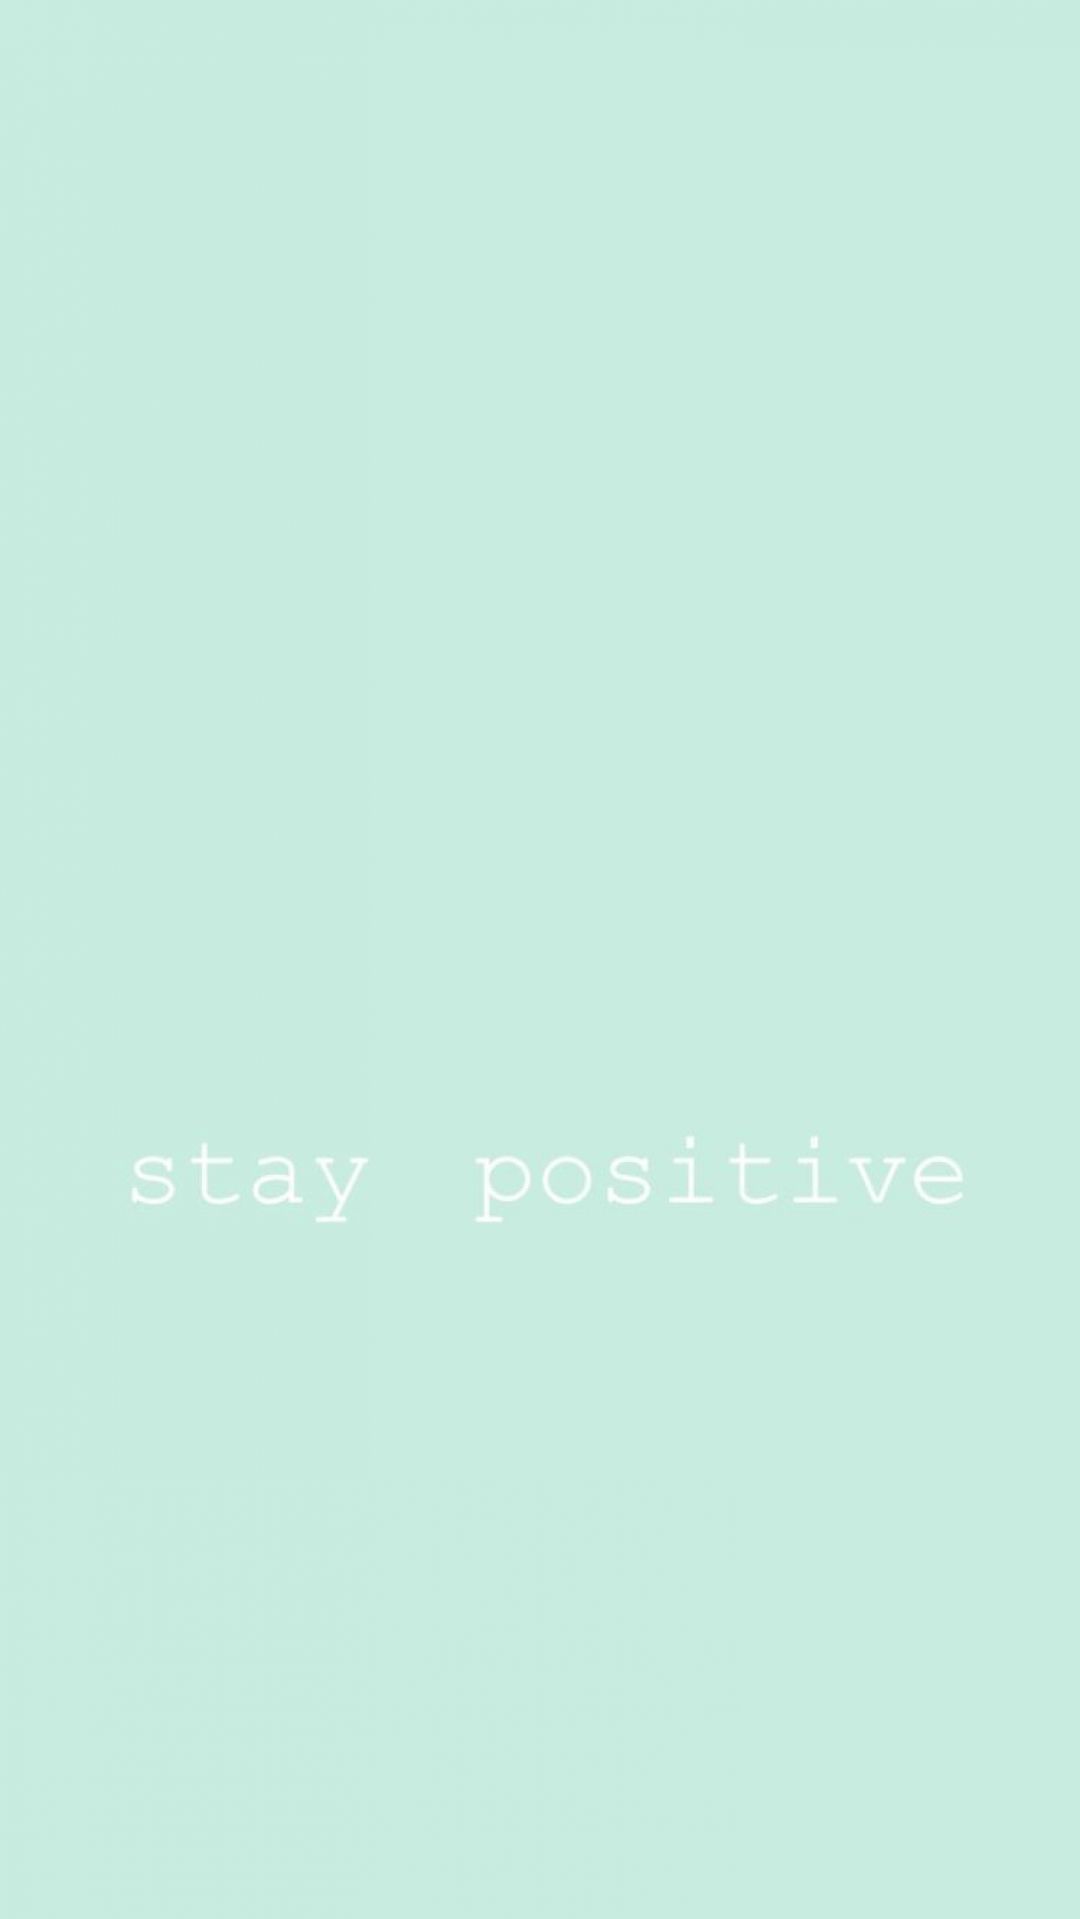 Stay positive wallpaper - Mint green